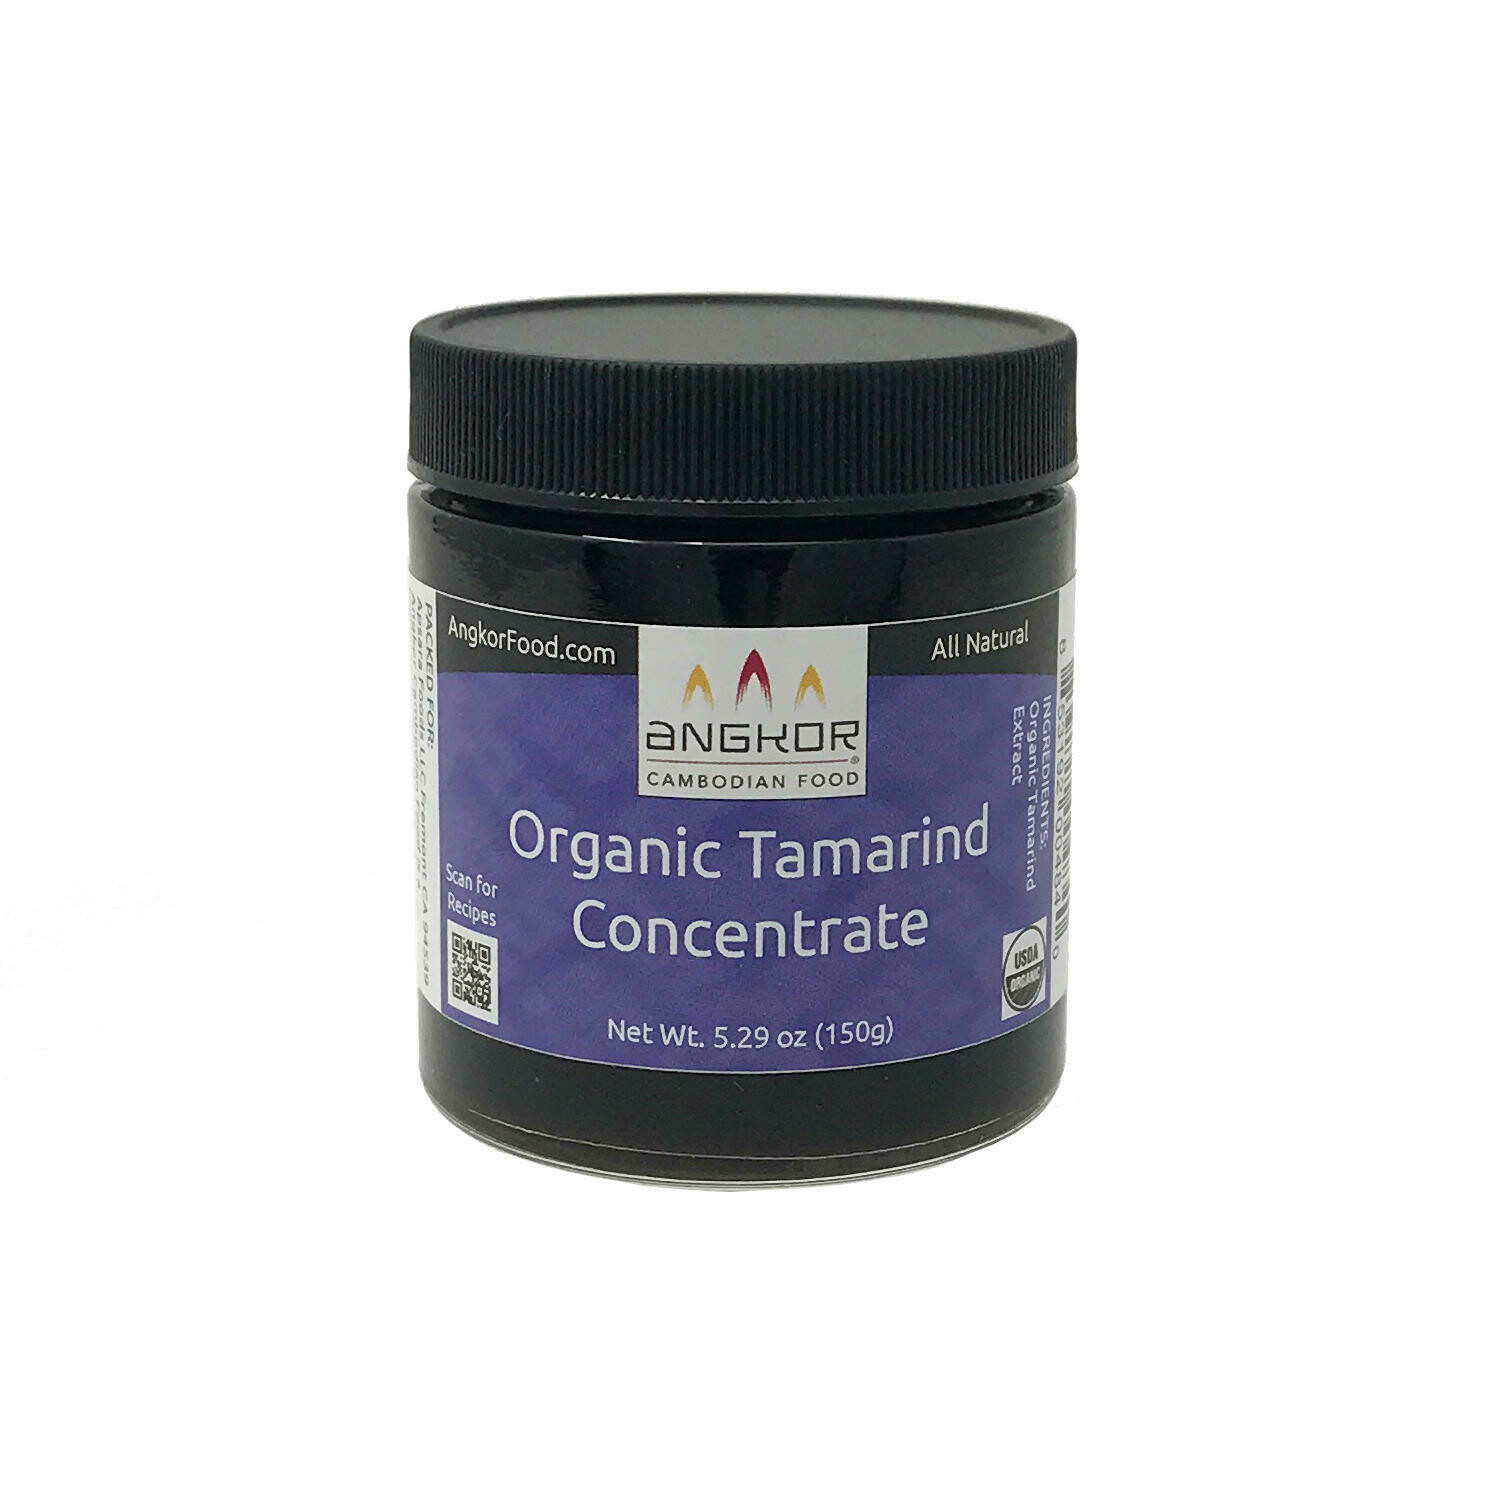 Organic Tamarind Concentrate - 5.29 oz (150g)